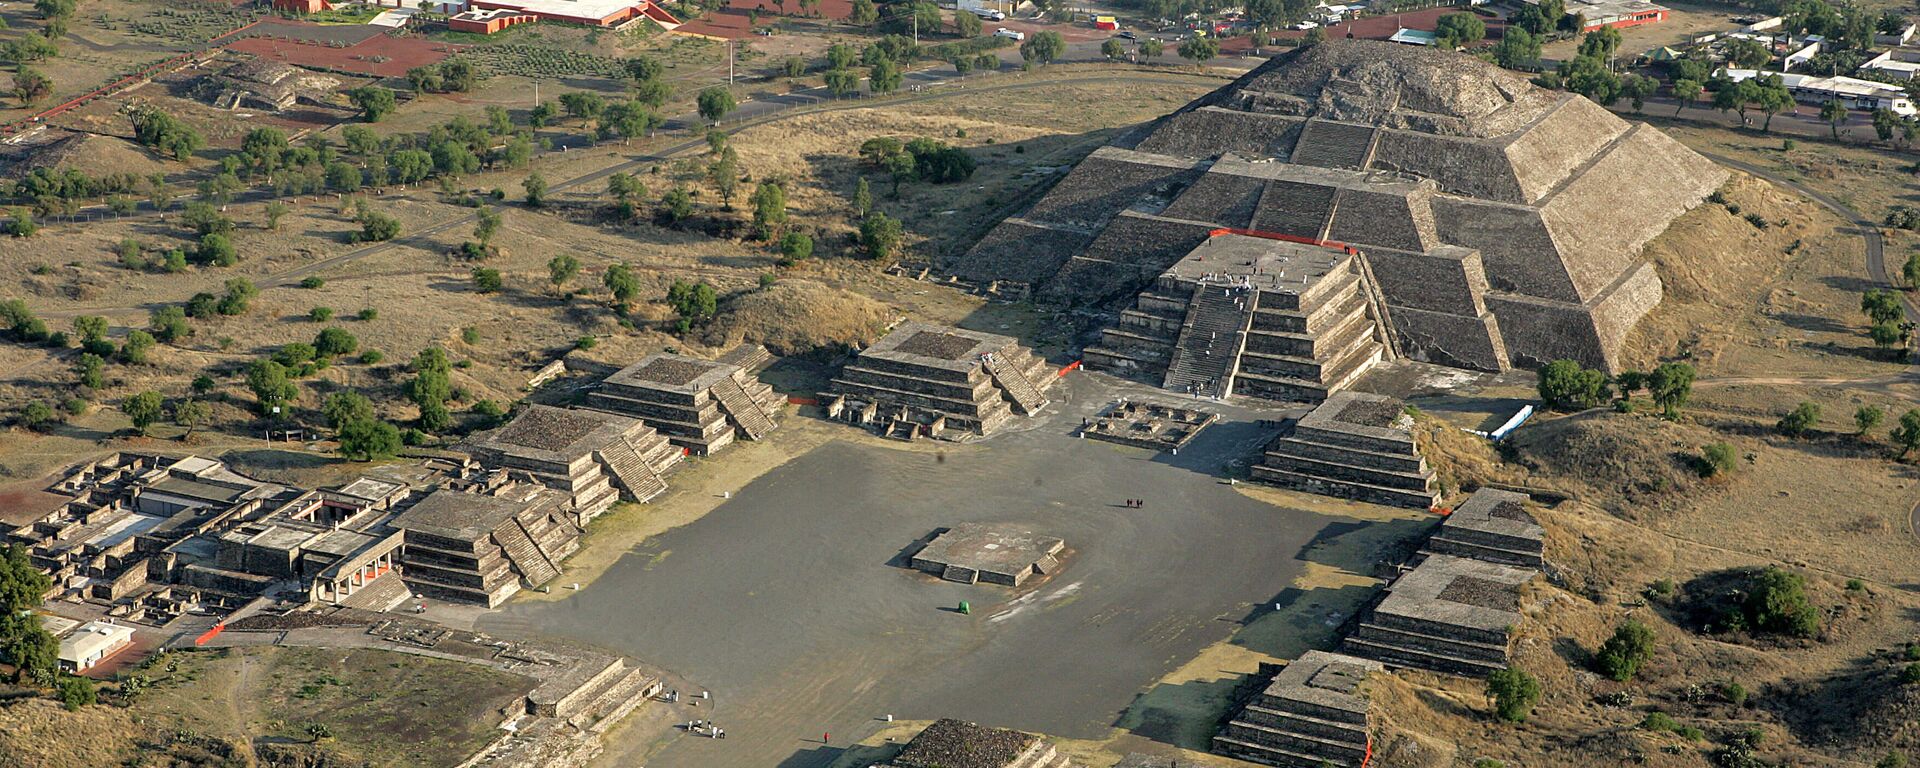 La pirámide de la Luna en Teotihuacán, México - Sputnik Mundo, 1920, 21.09.2021